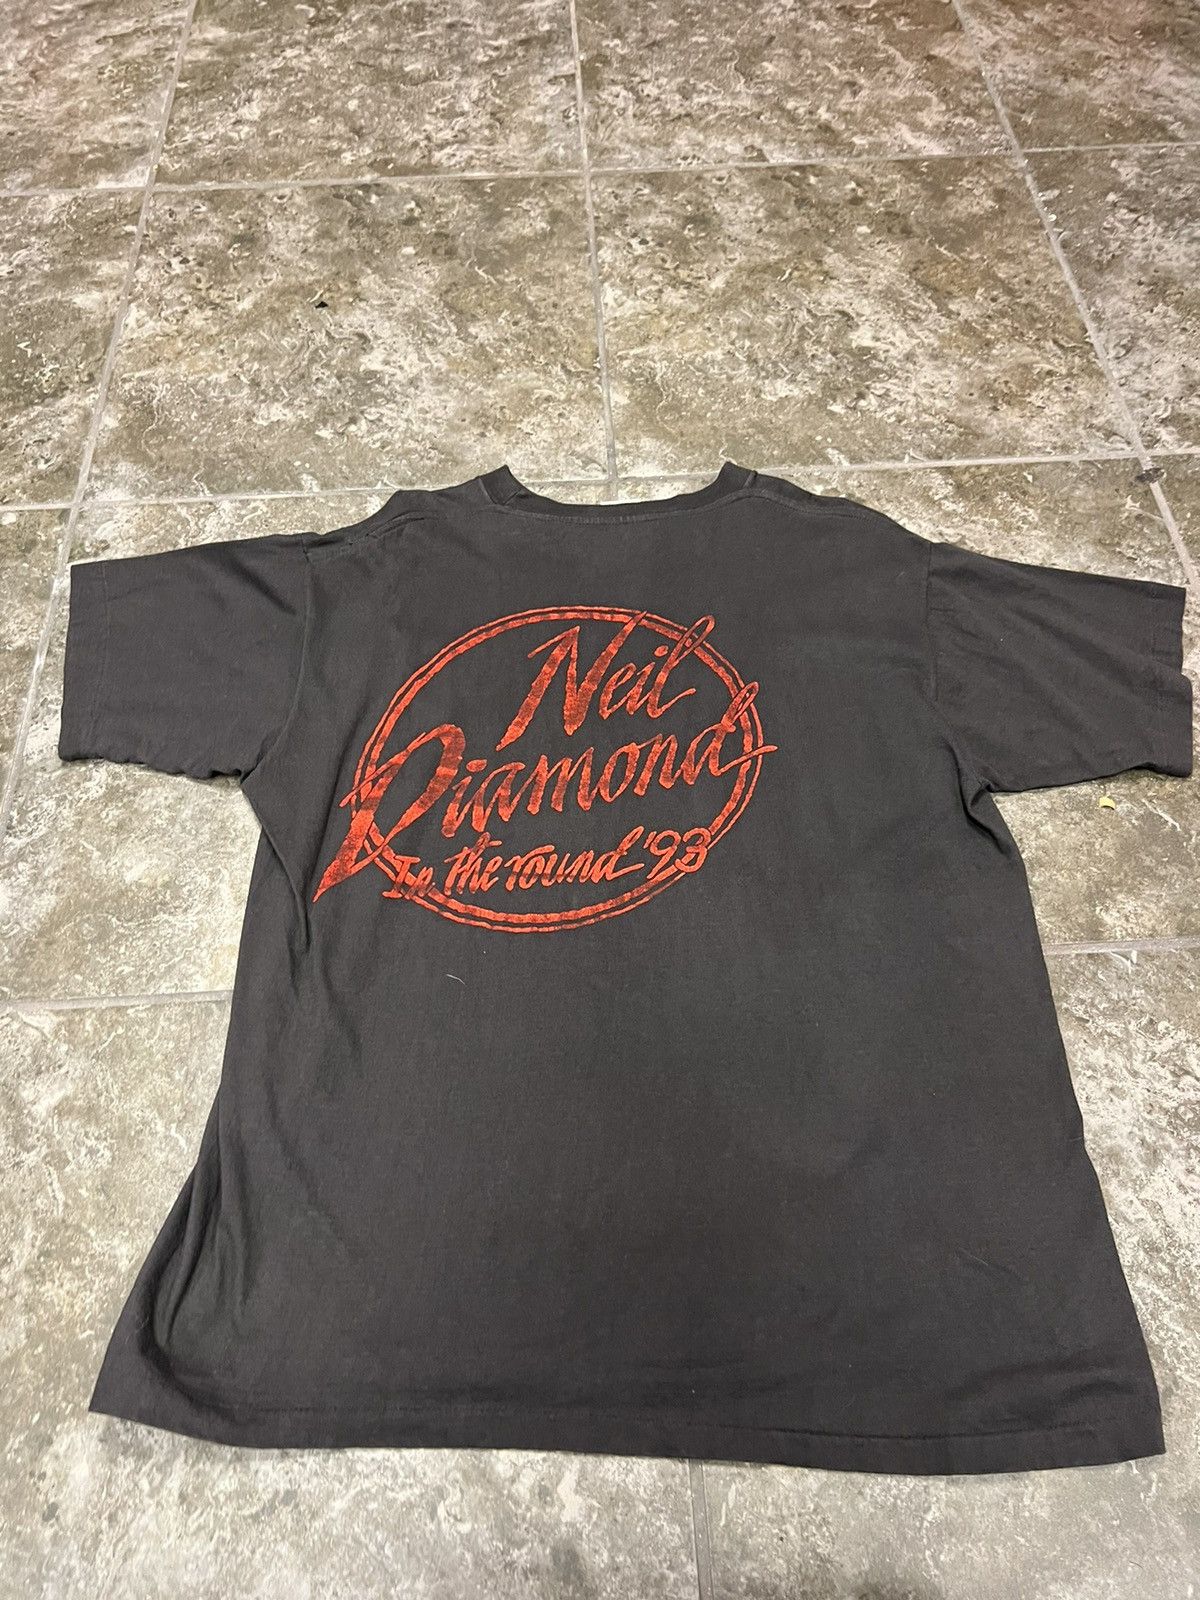 Vintage Vintage 93 Neil Diamond Tour Tshirt Size US M / EU 48-50 / 2 - 3 Preview